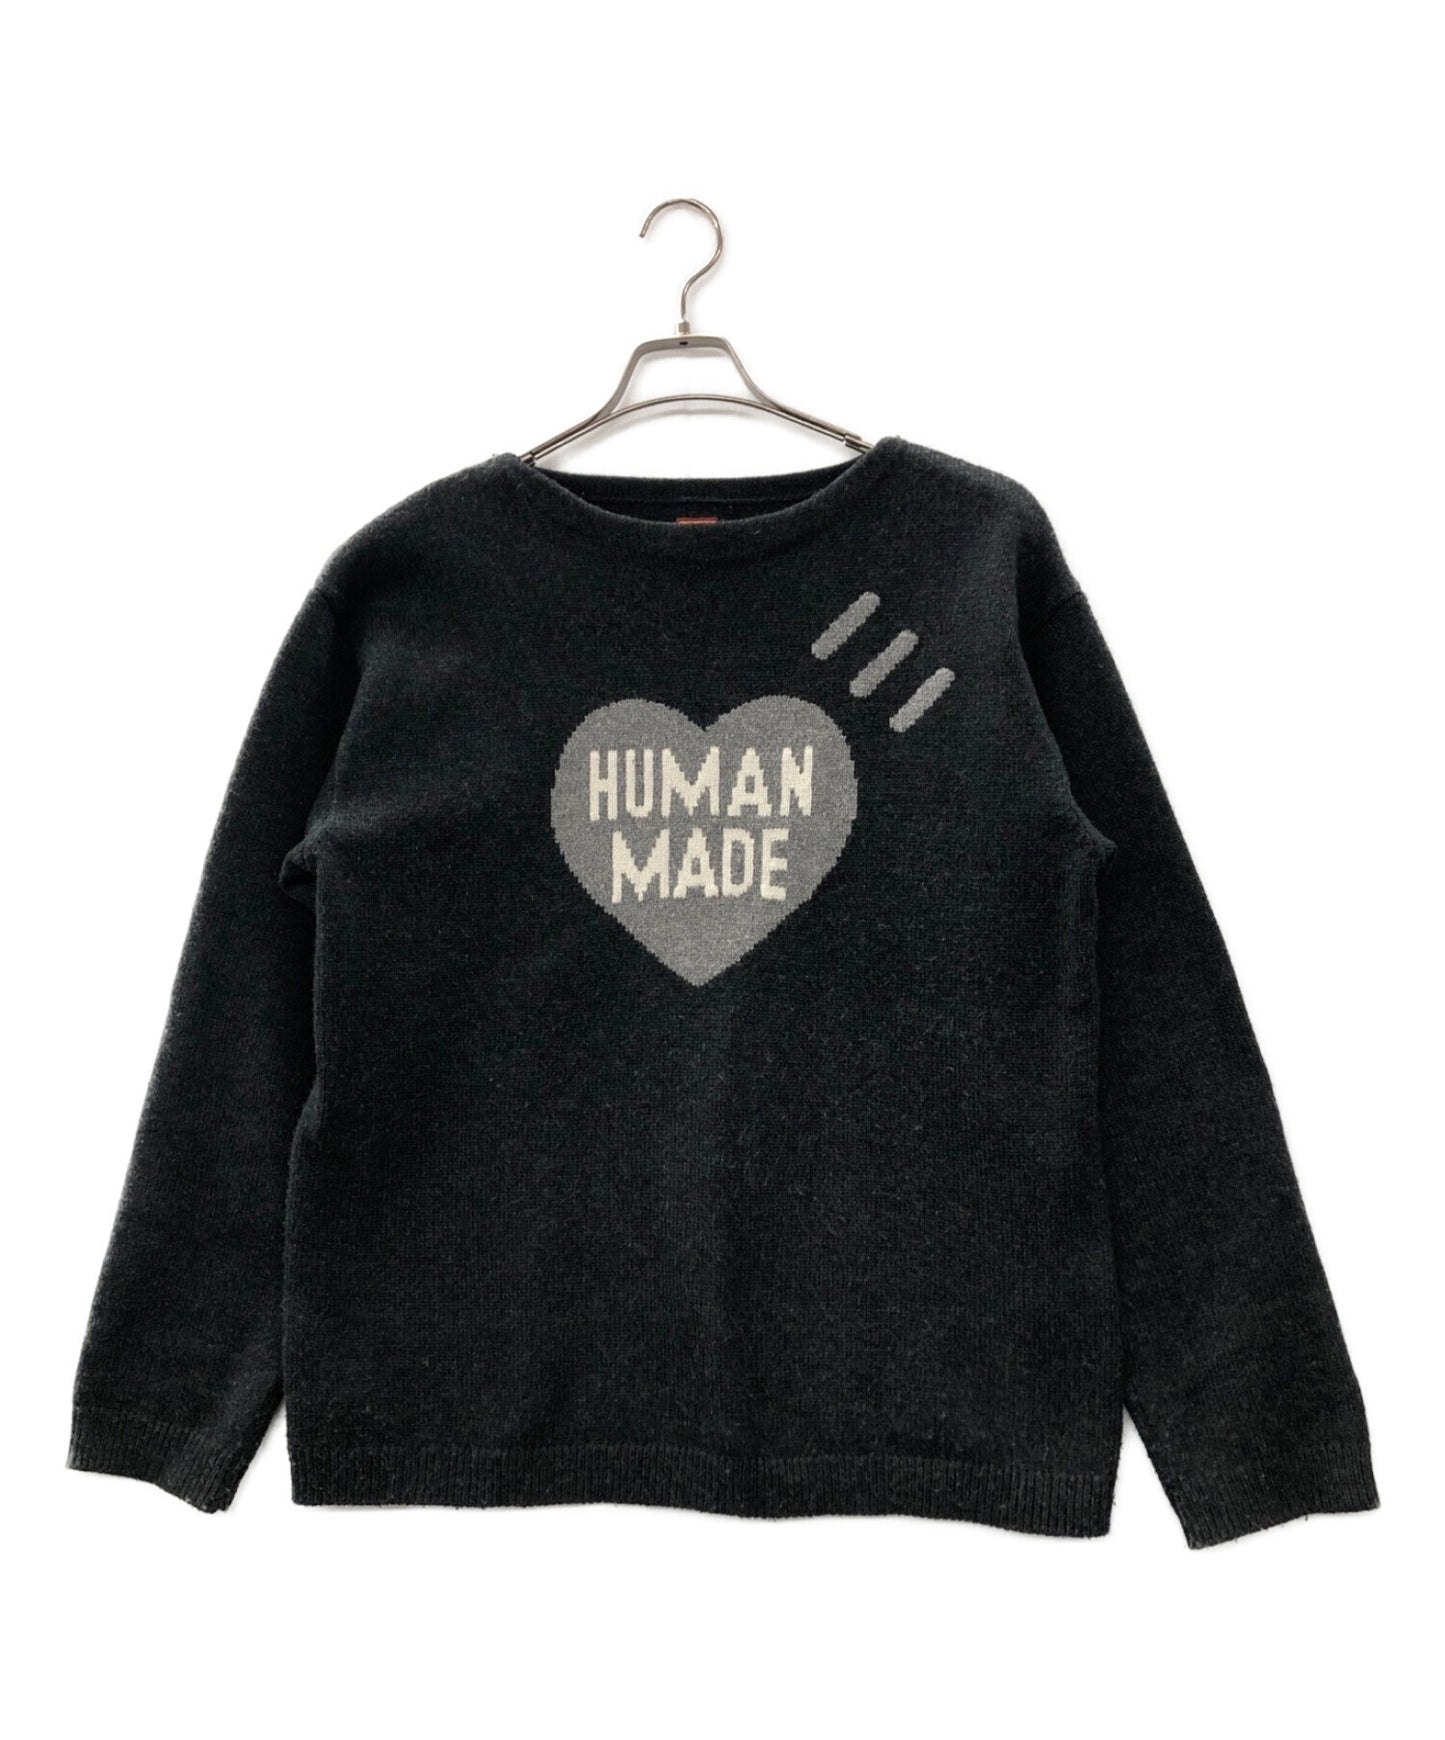 HUMAN MADE Heart Knit Sweater